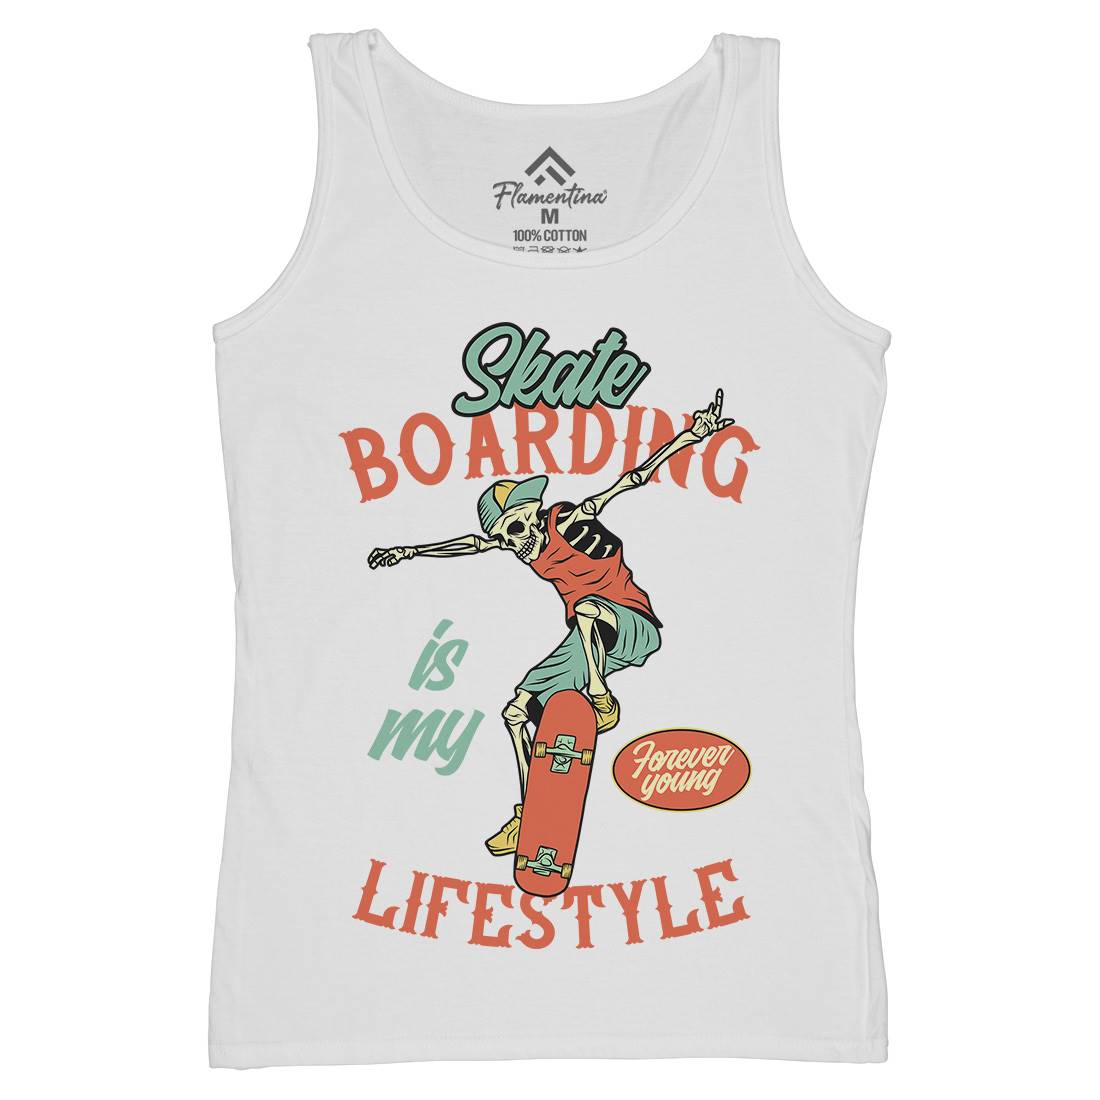 Skateboarding Lifestyle Womens Organic Tank Top Vest Skate D976